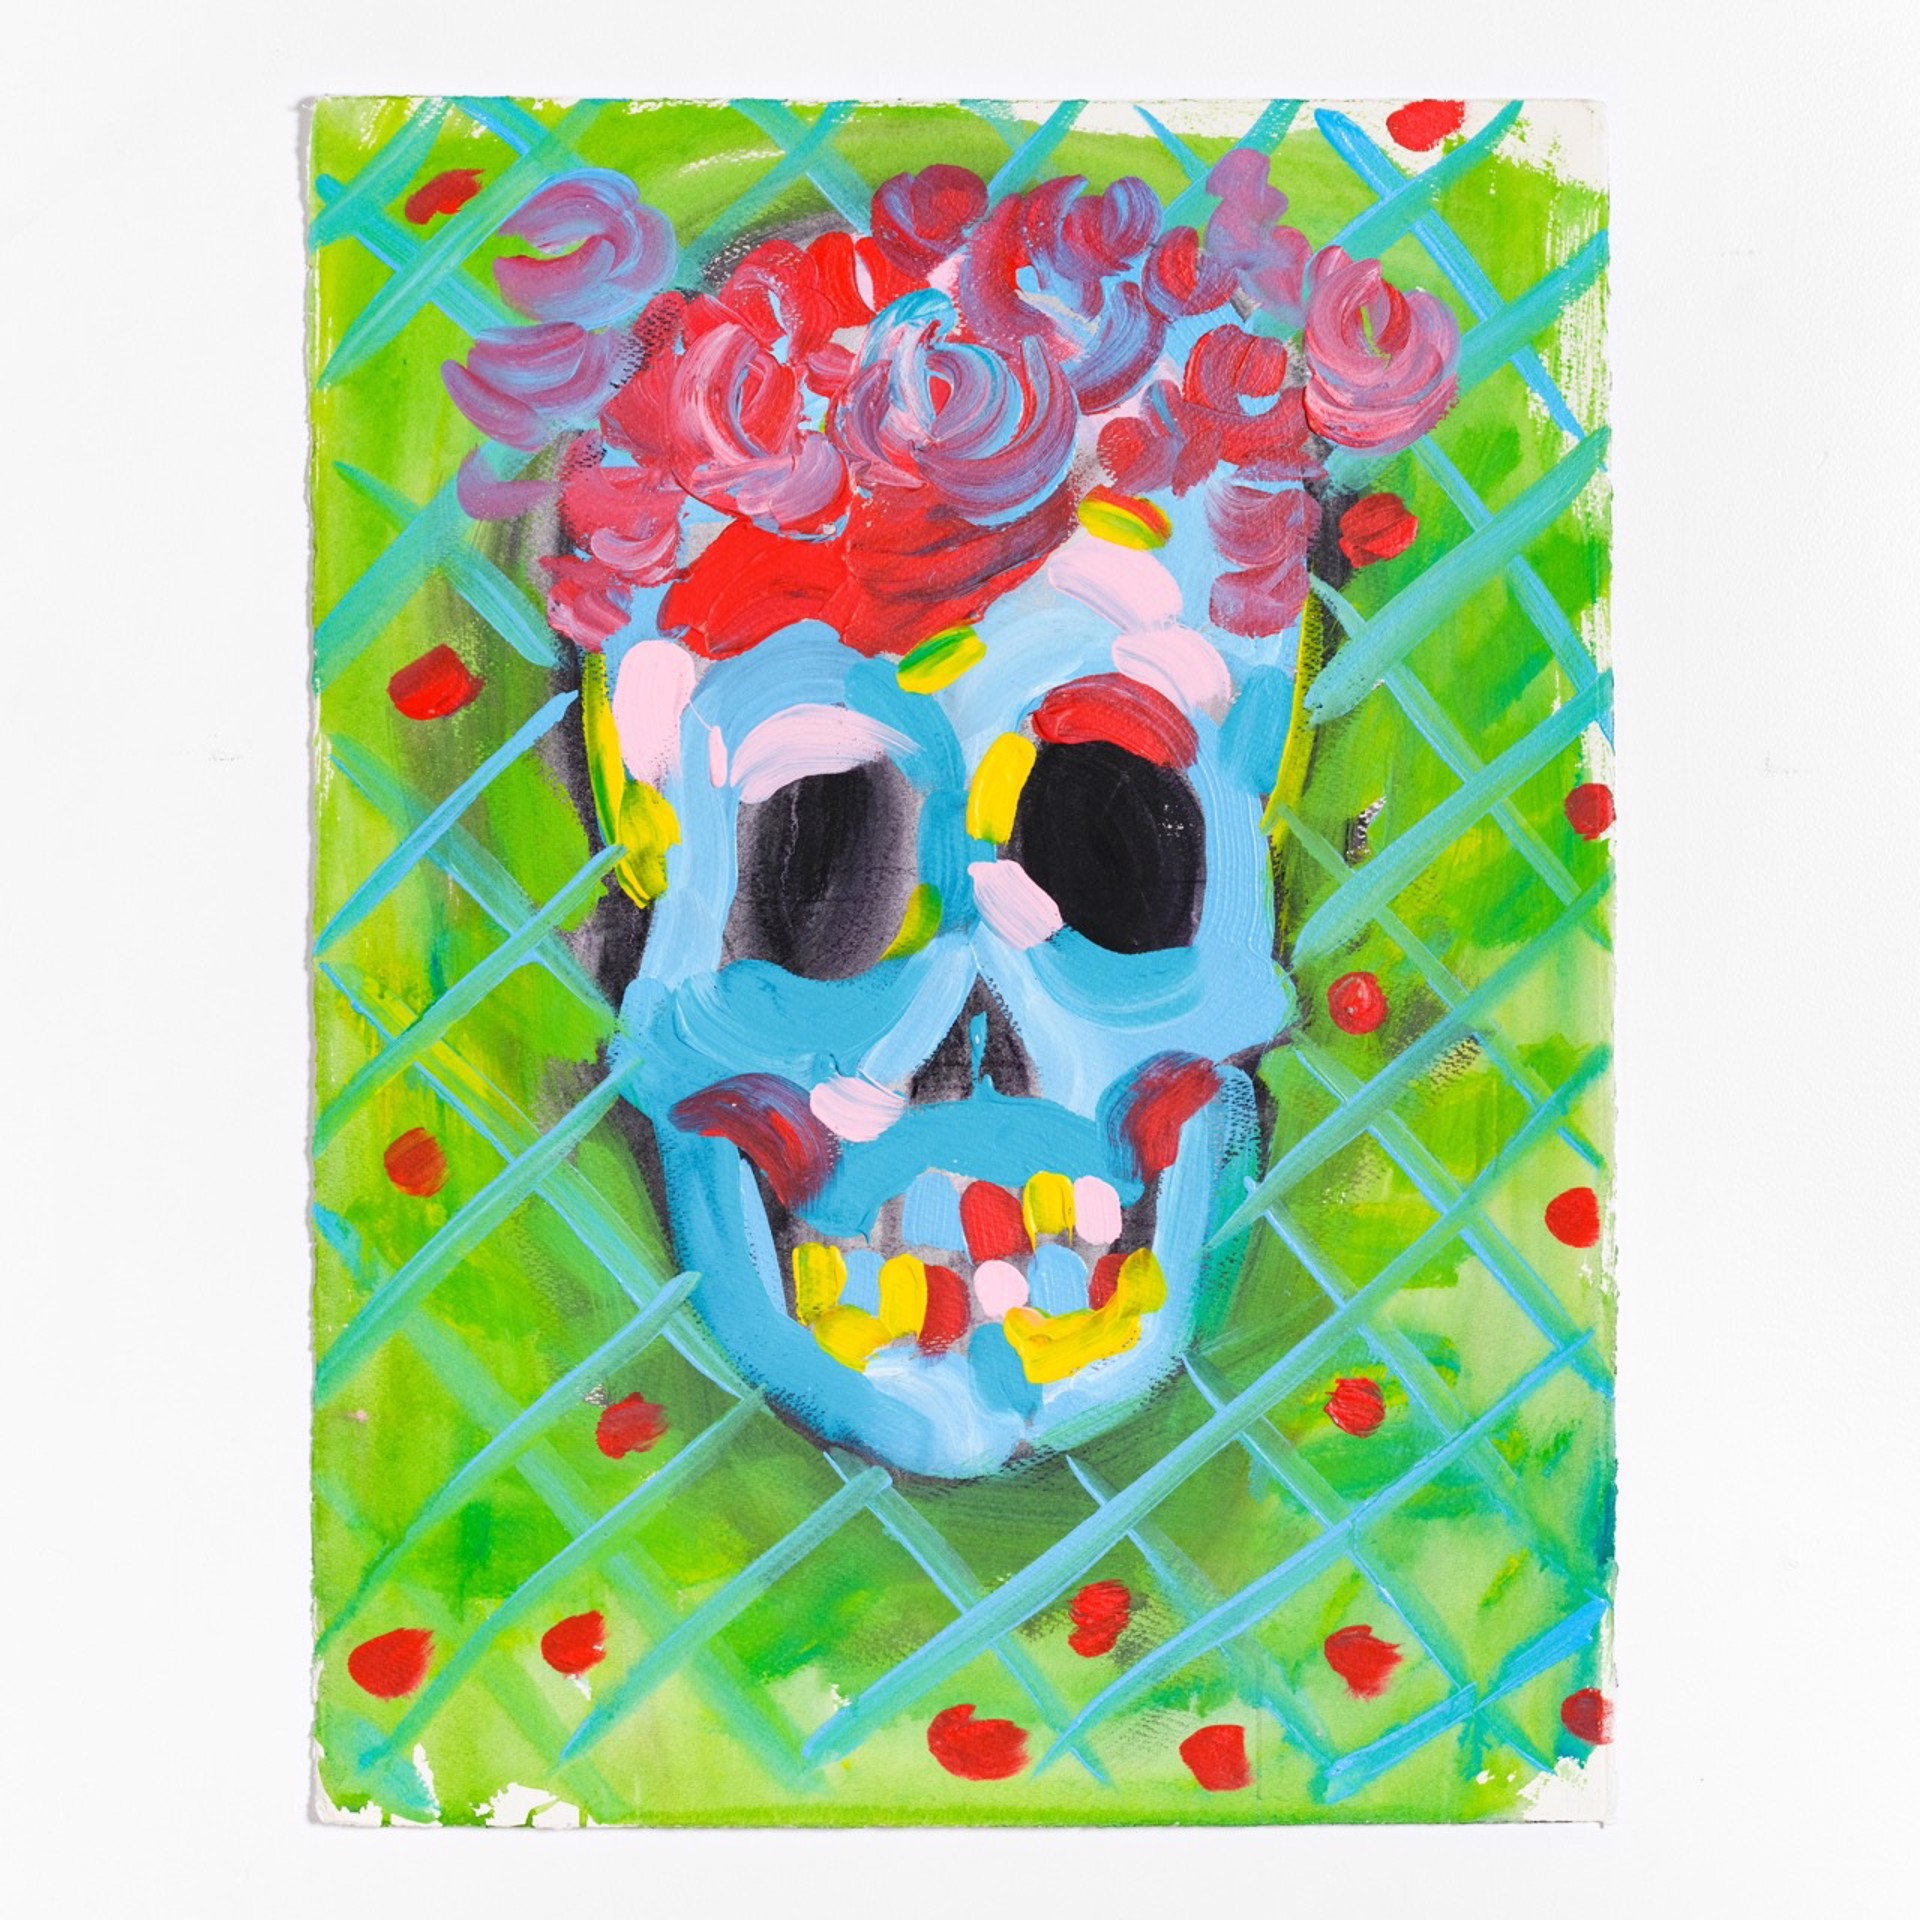 Skull & flowers by Bradley Theodore